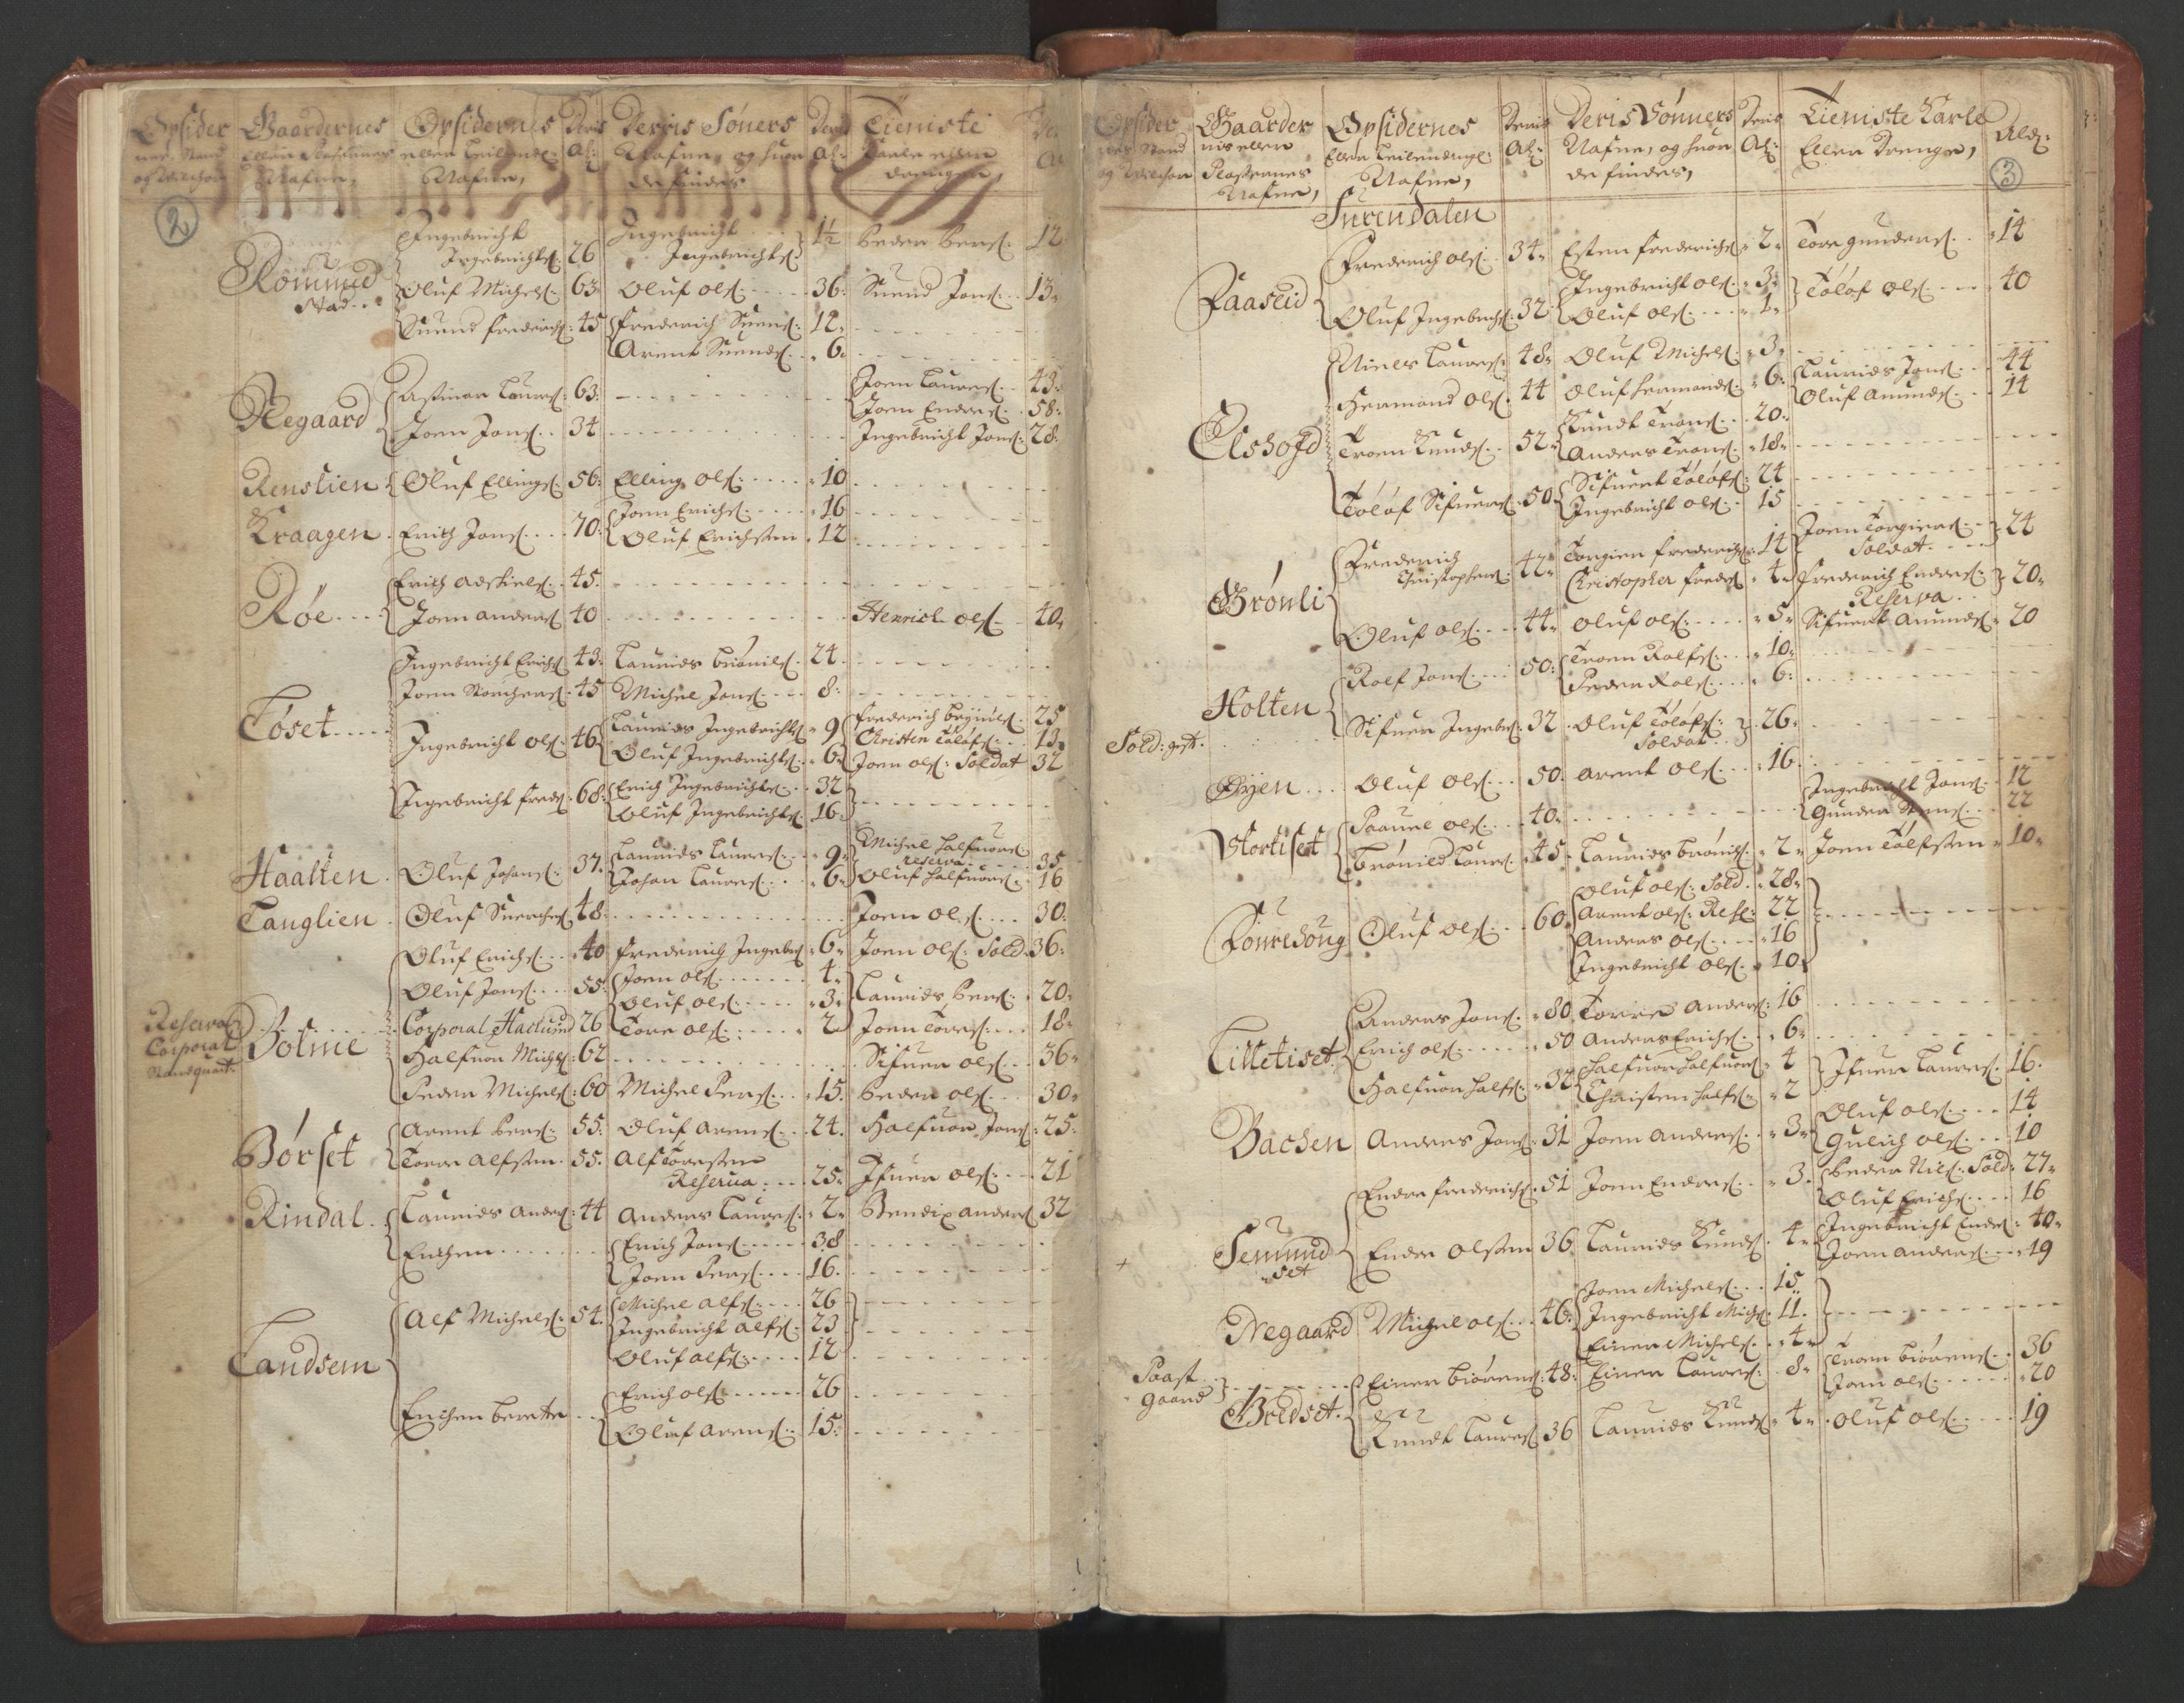 RA, Manntallet 1701, nr. 11: Nordmøre fogderi og Romsdal fogderi, 1701, s. 2-3